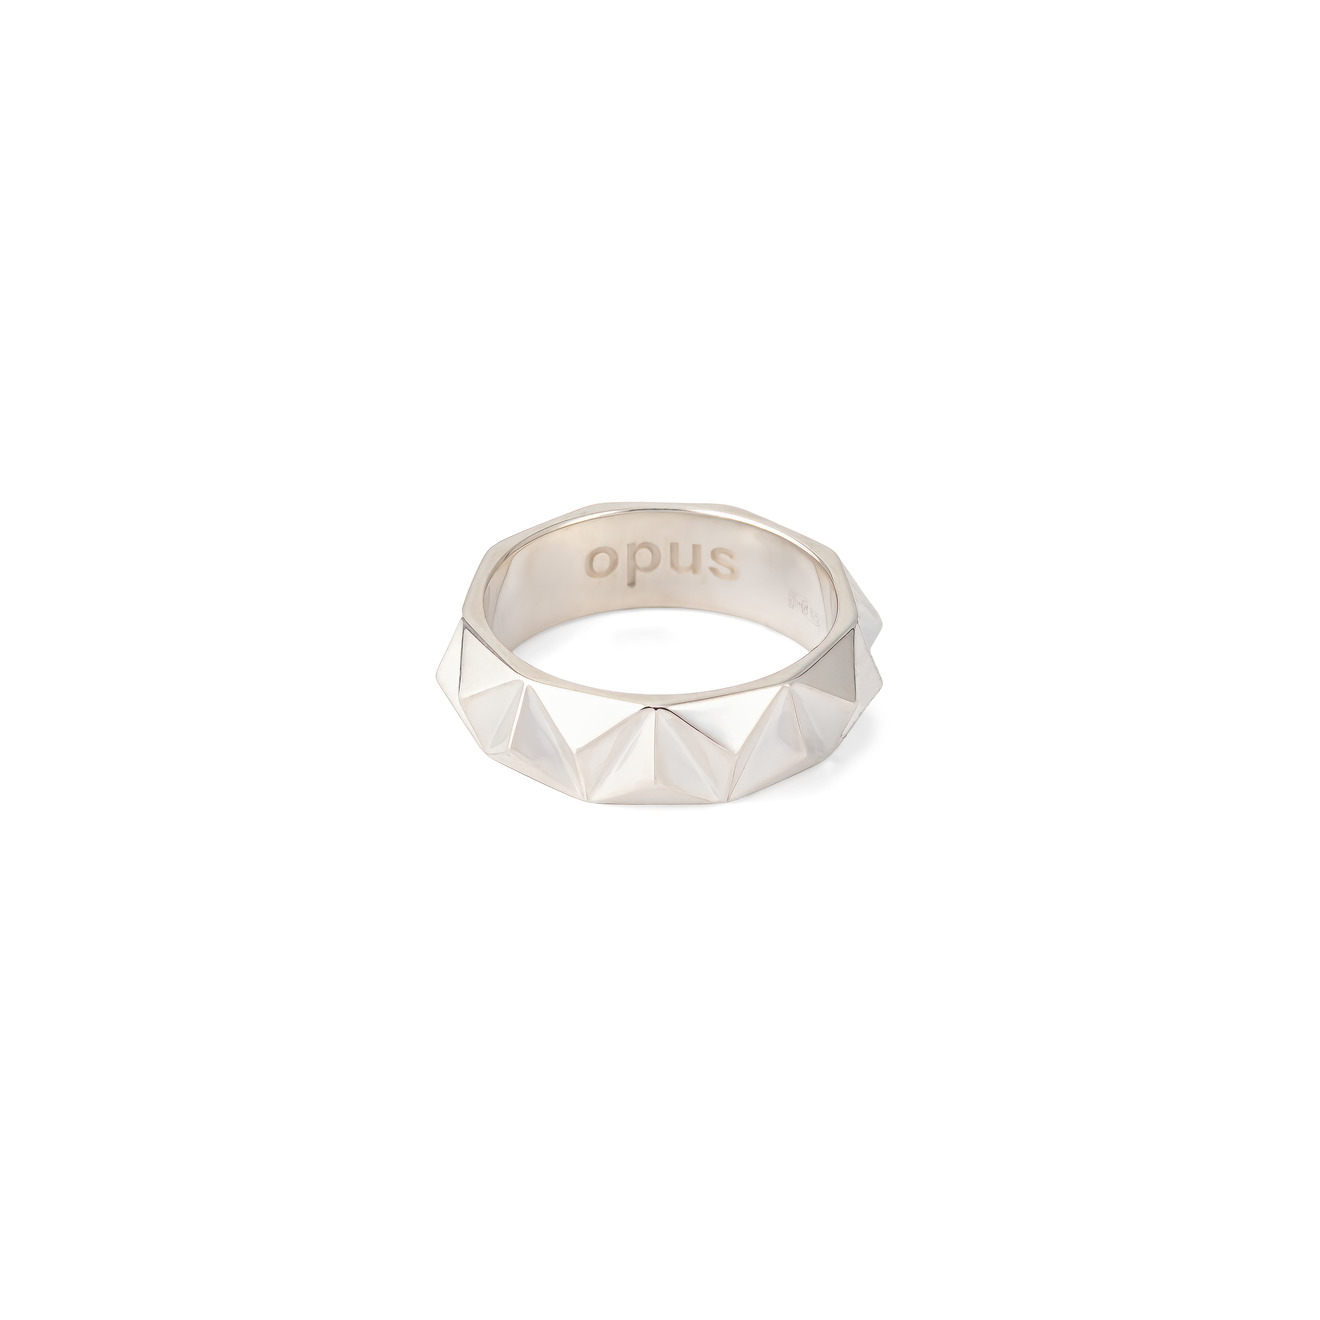 Opus Jewelry Кольцо из серебра с гранями Razor Band Ring 6.5 мм opus jewelry моносерьга из серебра net cross earring с аметистом